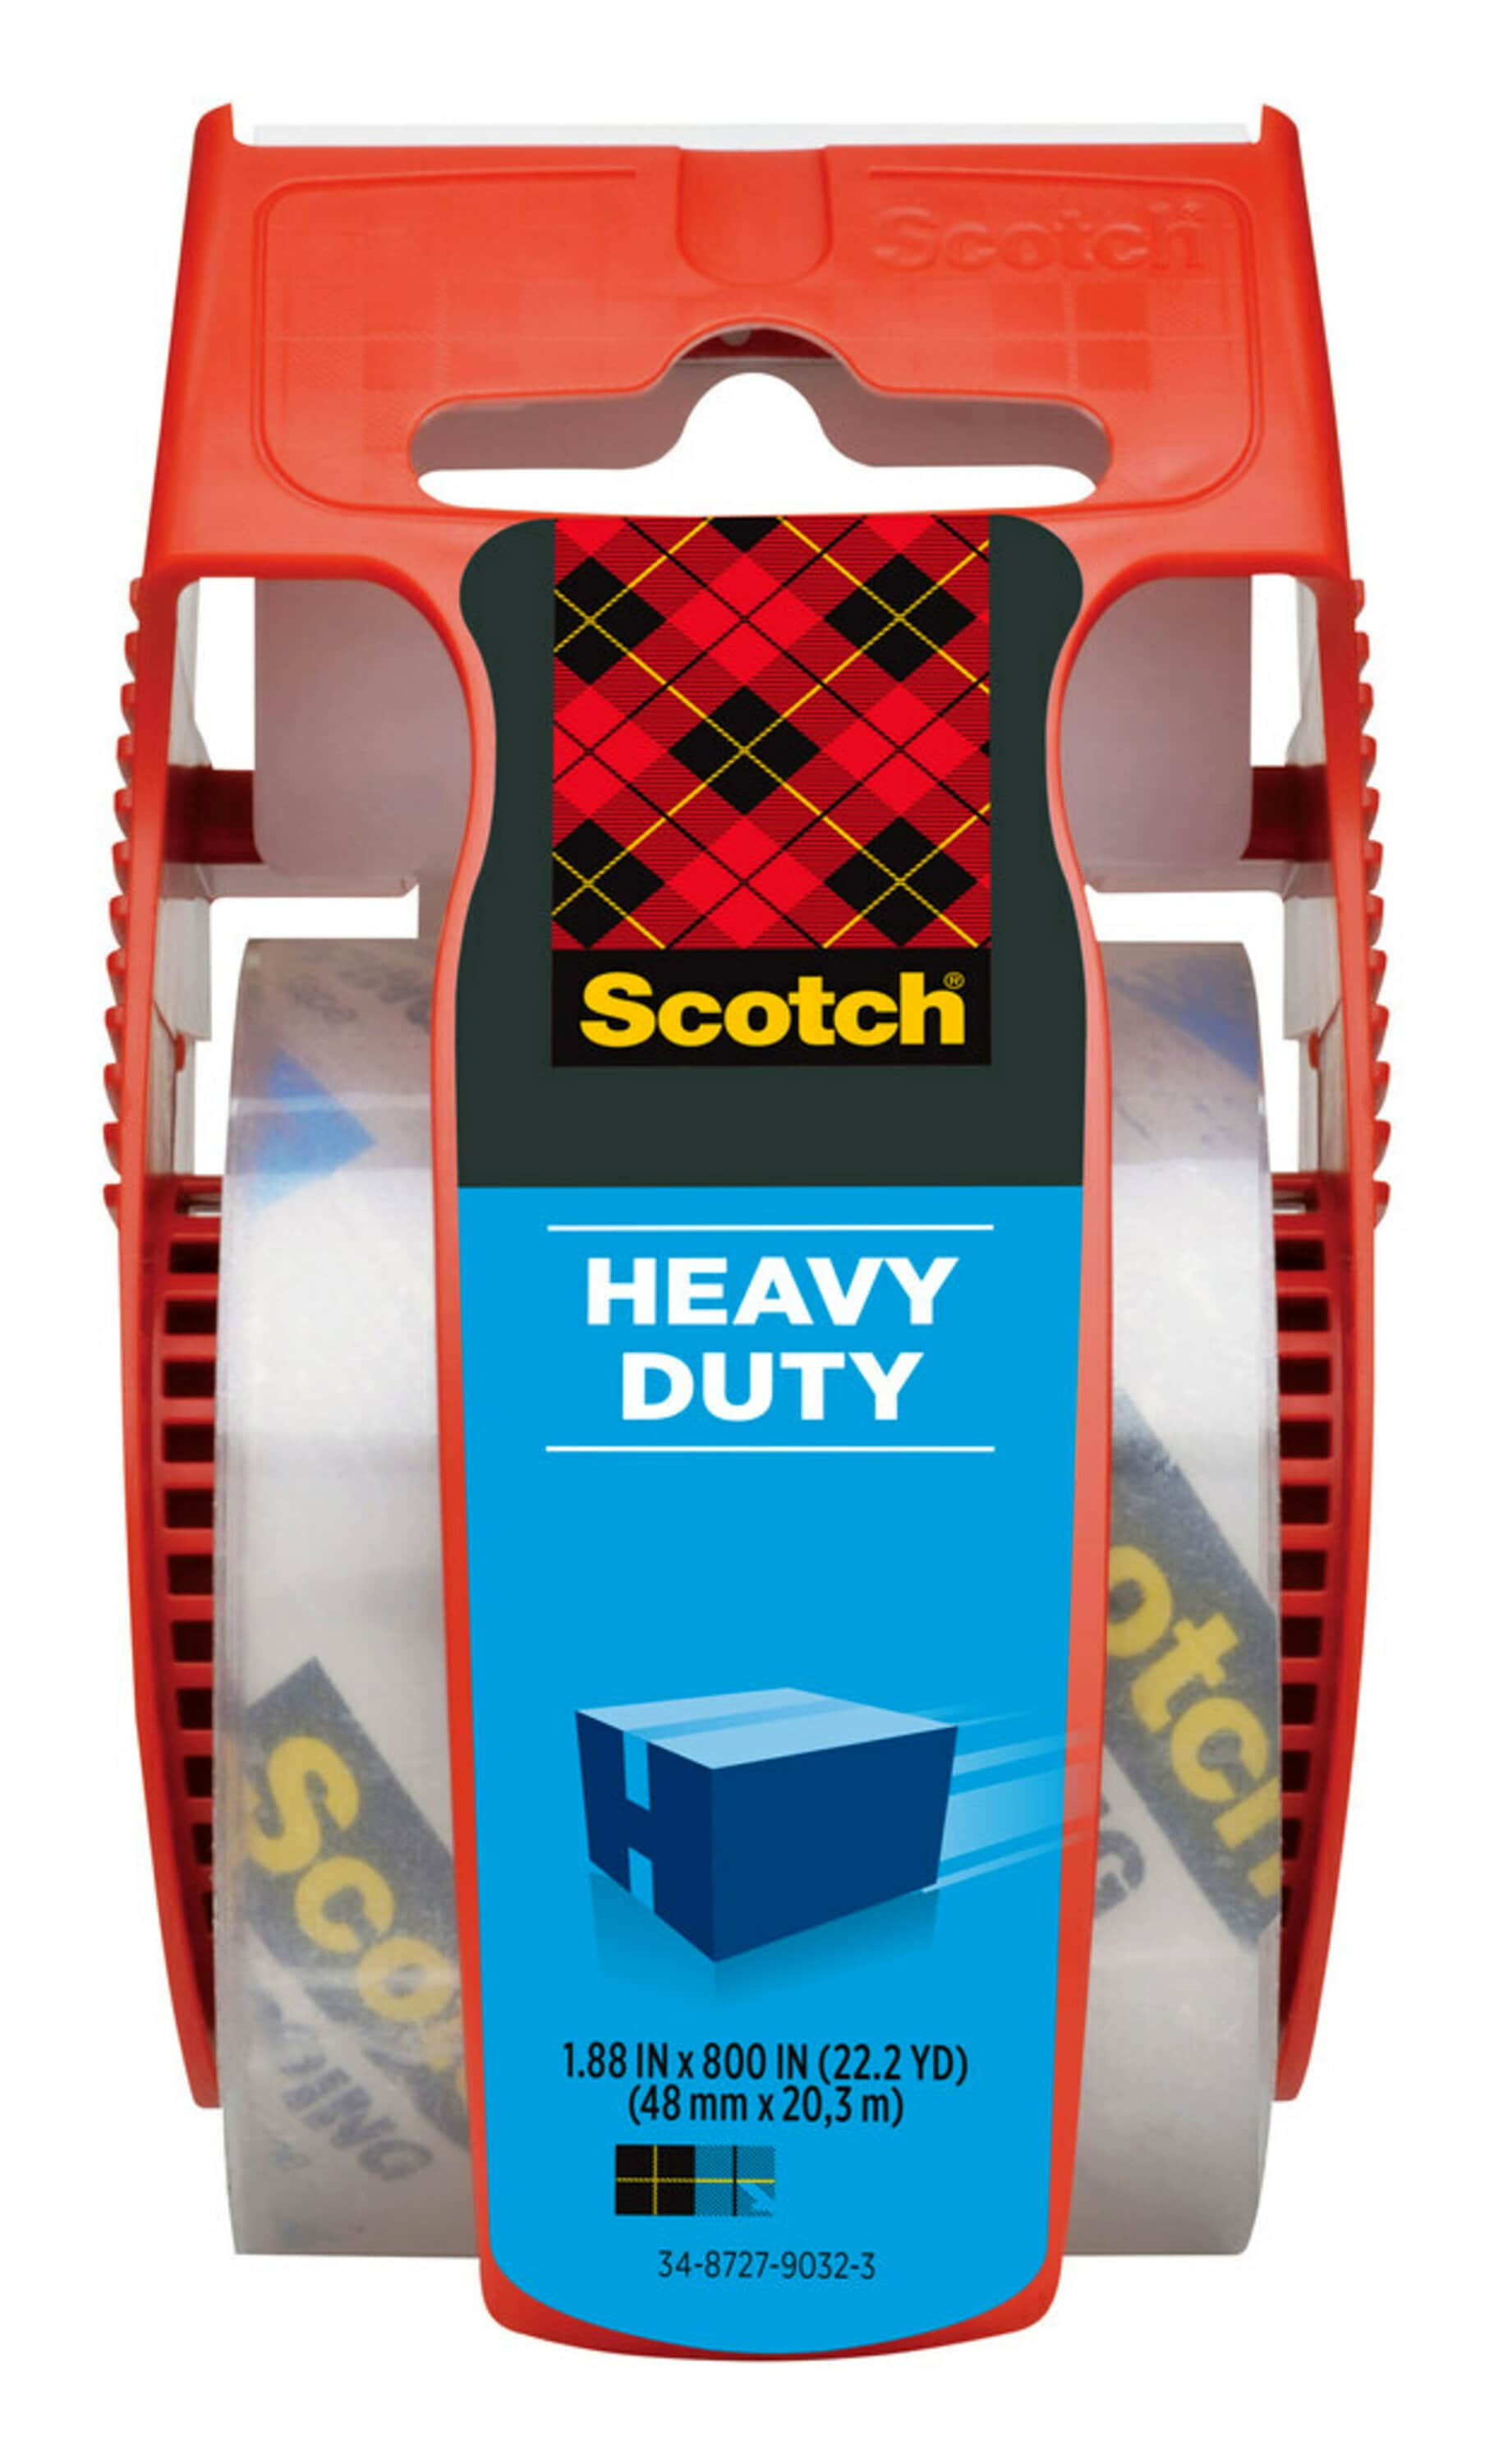 Scotch Heavy Duty Packaging Tape Dispenser, 1.88 x 60 yds, 2 Rolls/Pack -  Sam's Club